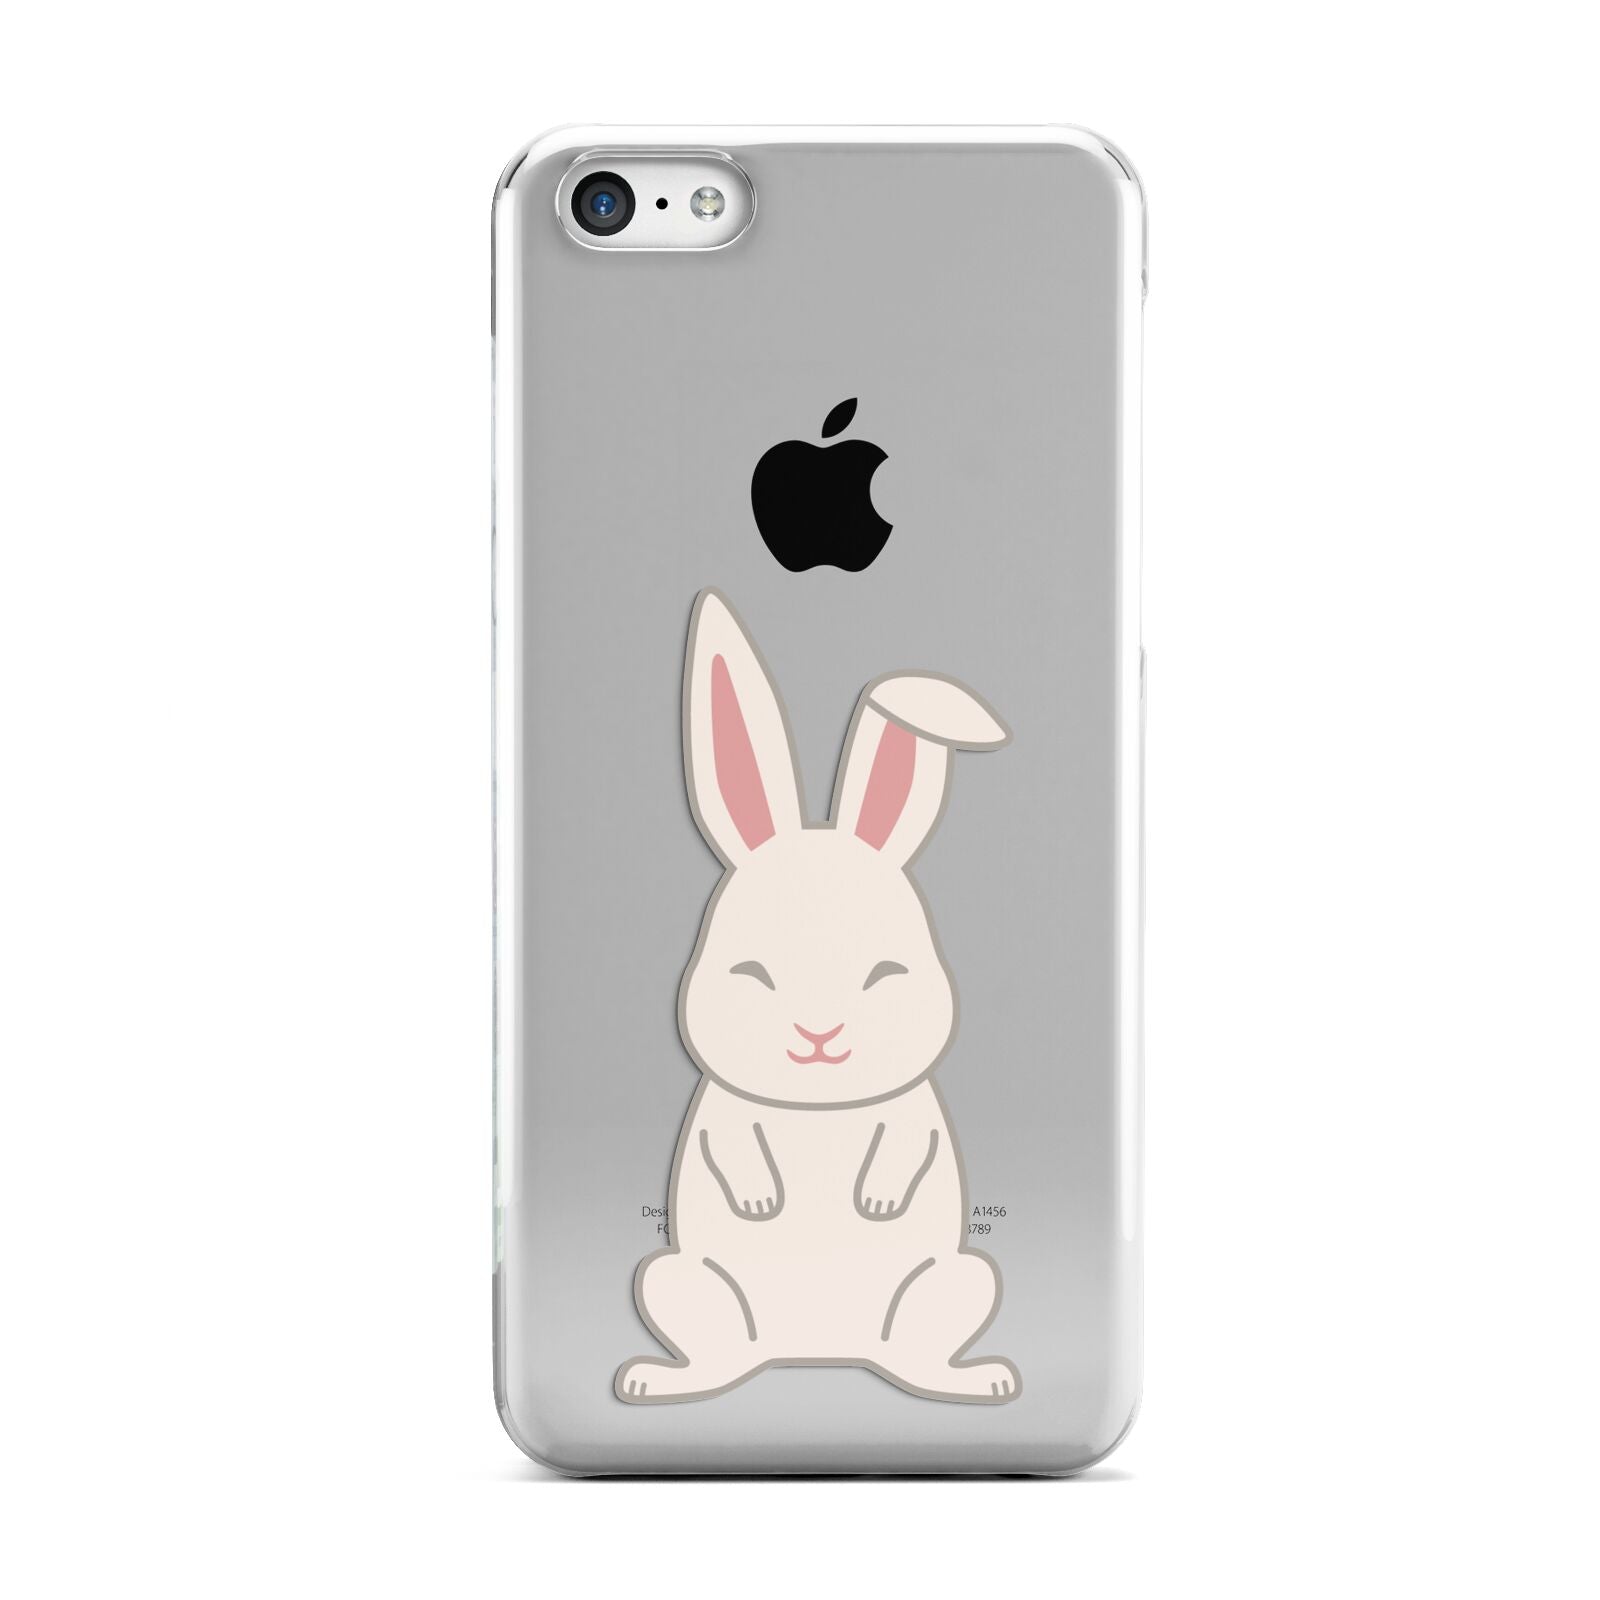 Bunny Apple iPhone 5c Case